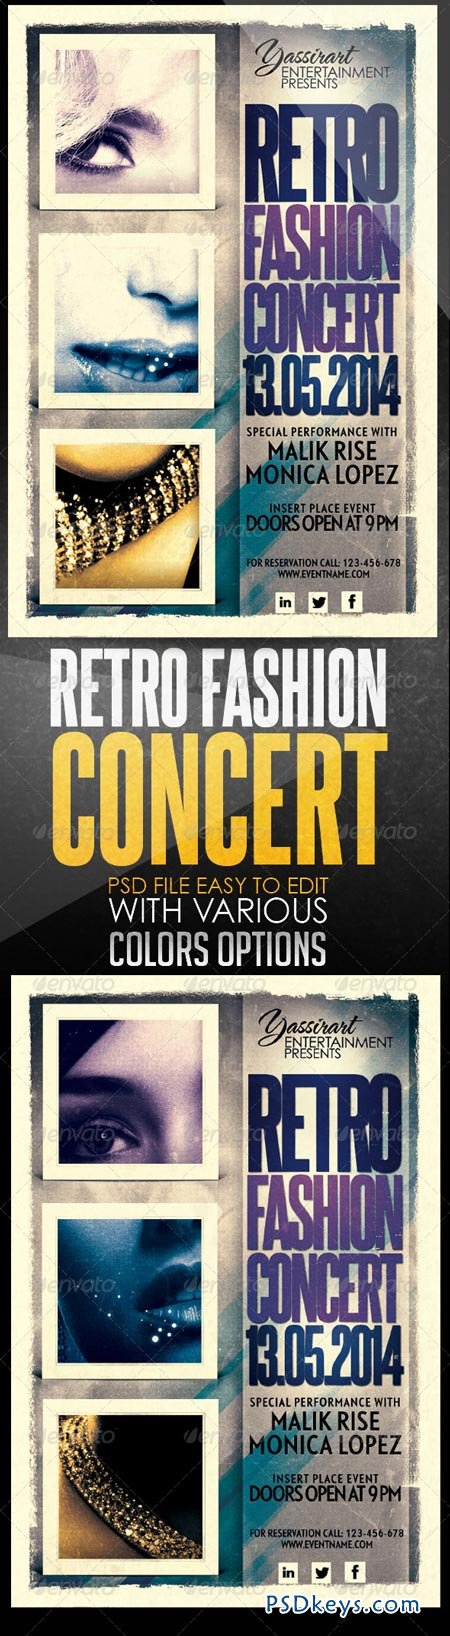 Retro Fashion Concert Flyer Template 6555645